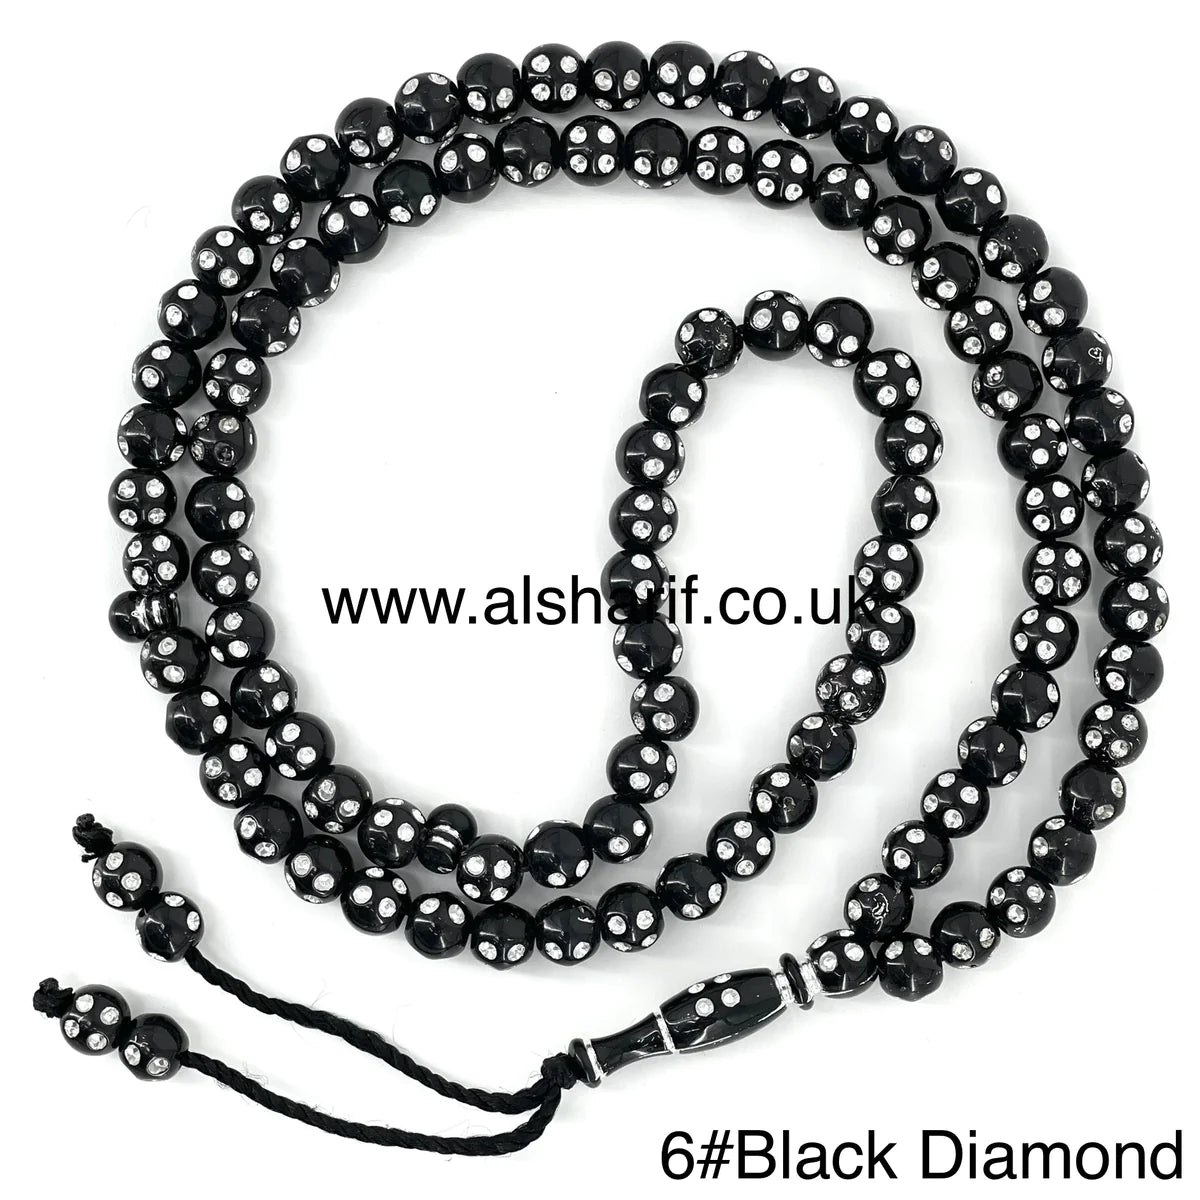 Tasbeeh 99 Beads 6#Black Diamond